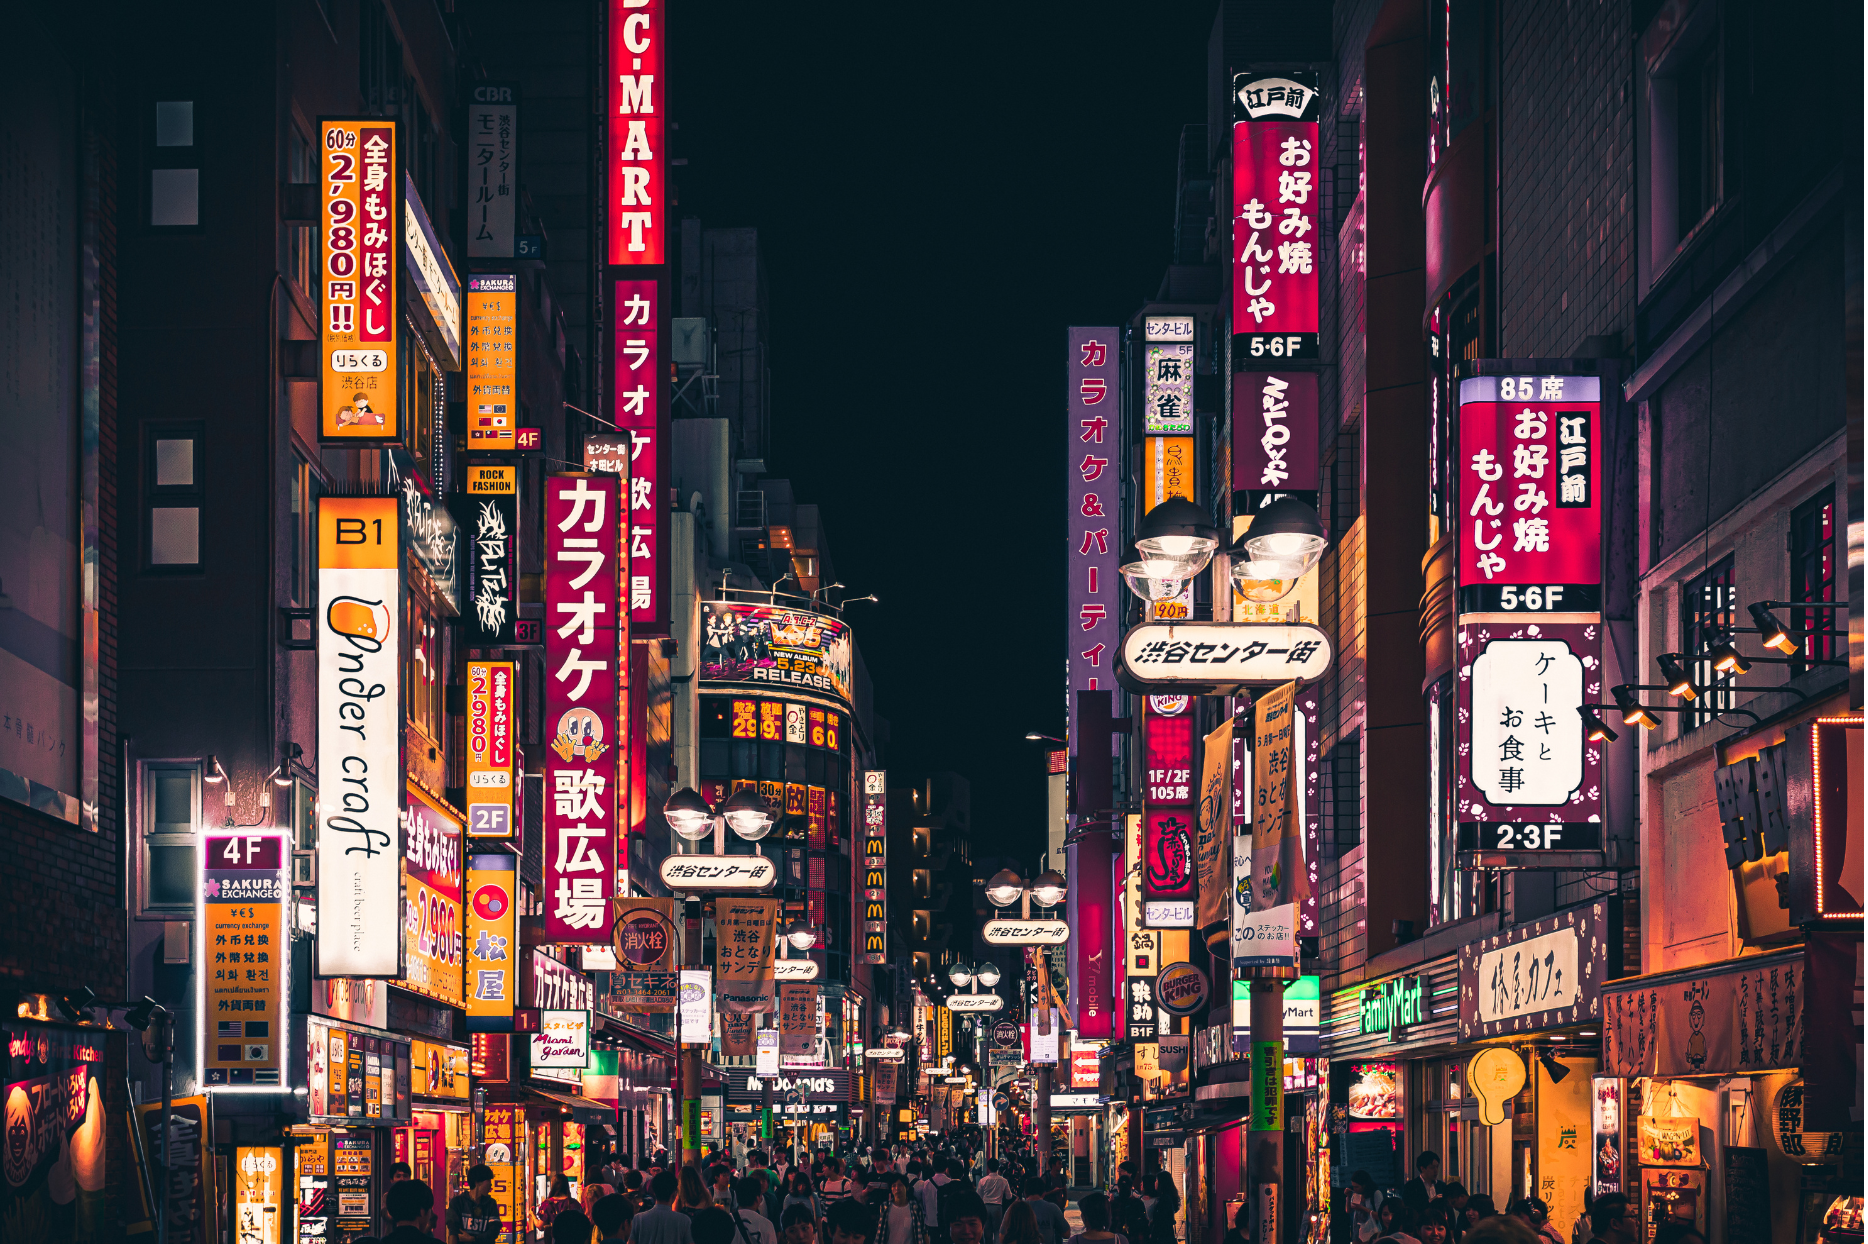 Japan Tokyo